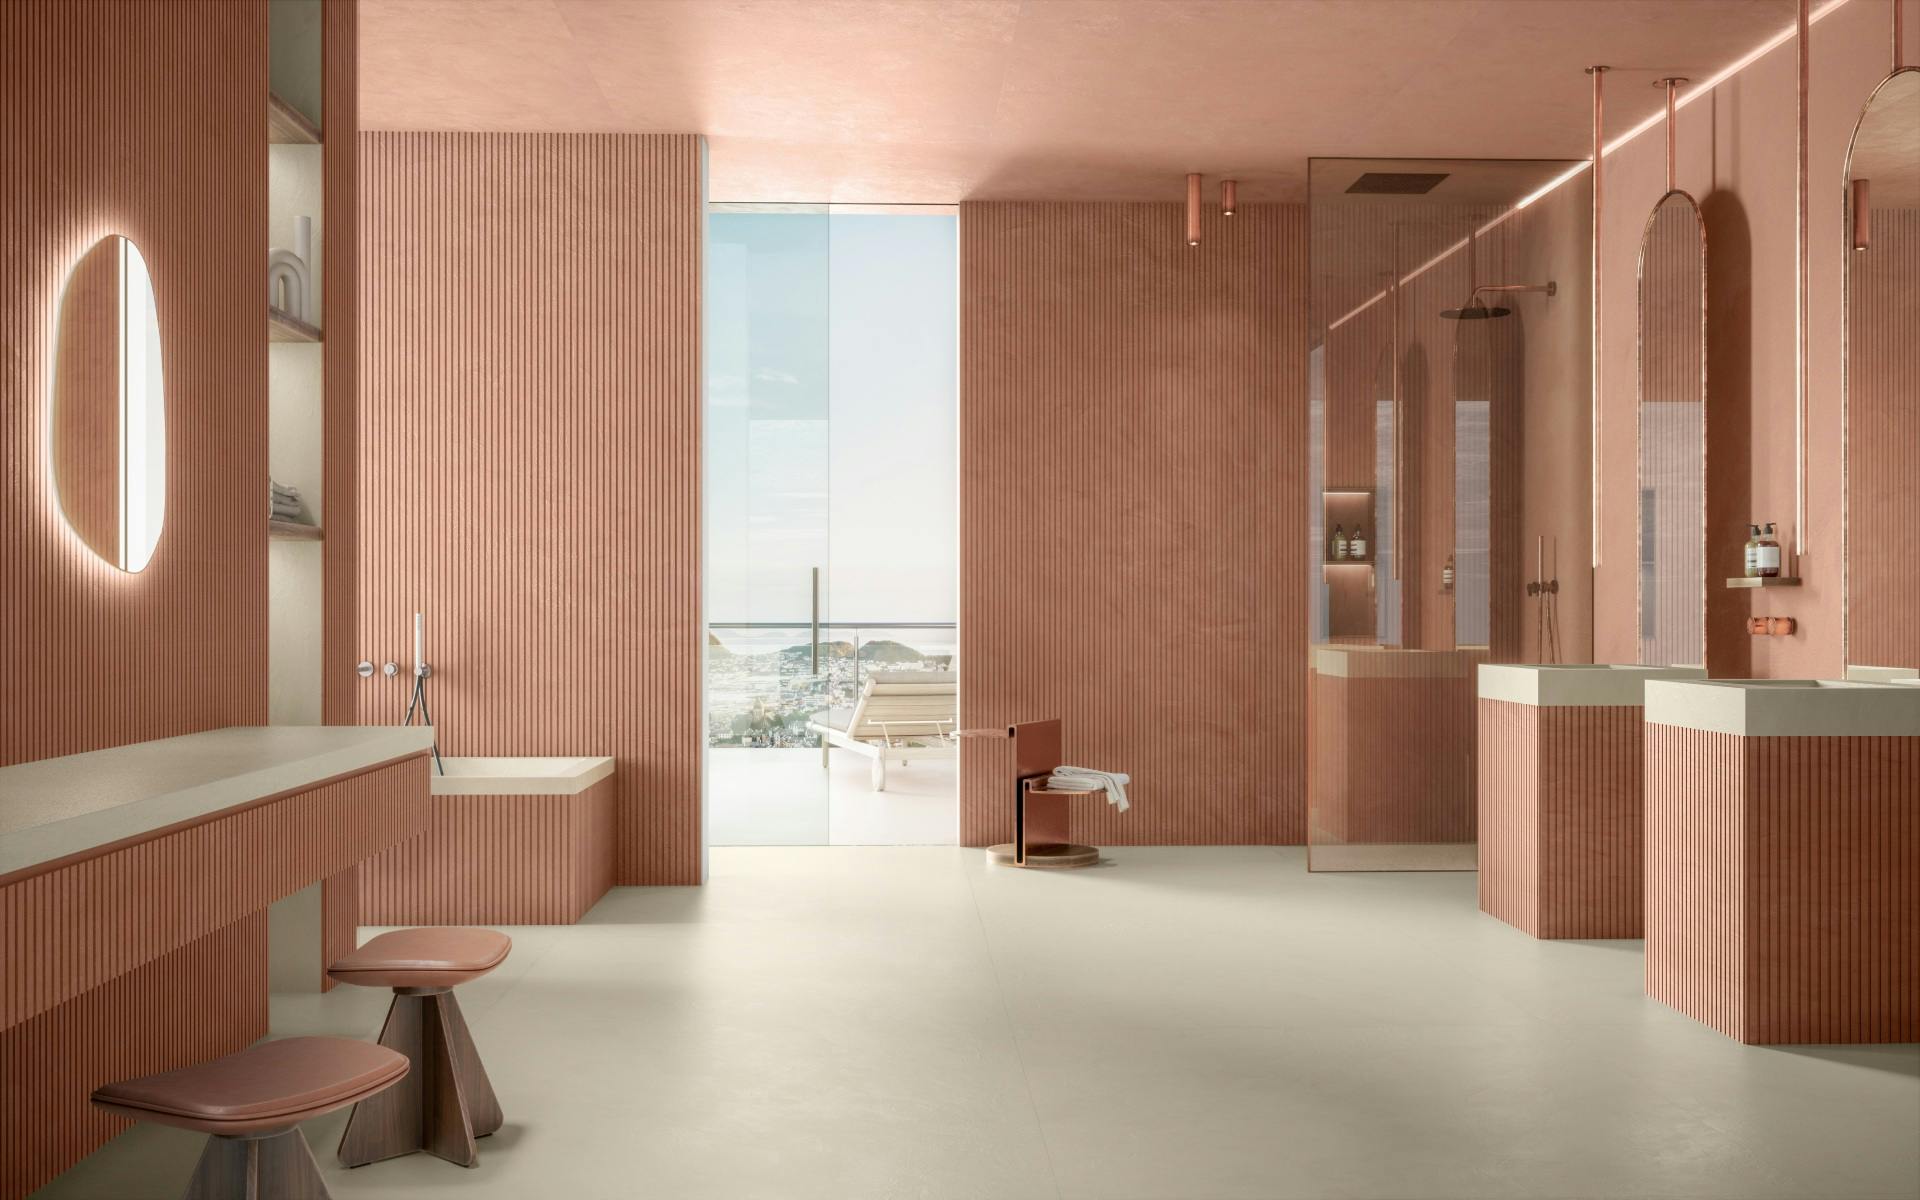 Numéro d'image 32 de la section actuelle de {{The perfect bathroom according to Claudia Afshar}} de Cosentino France